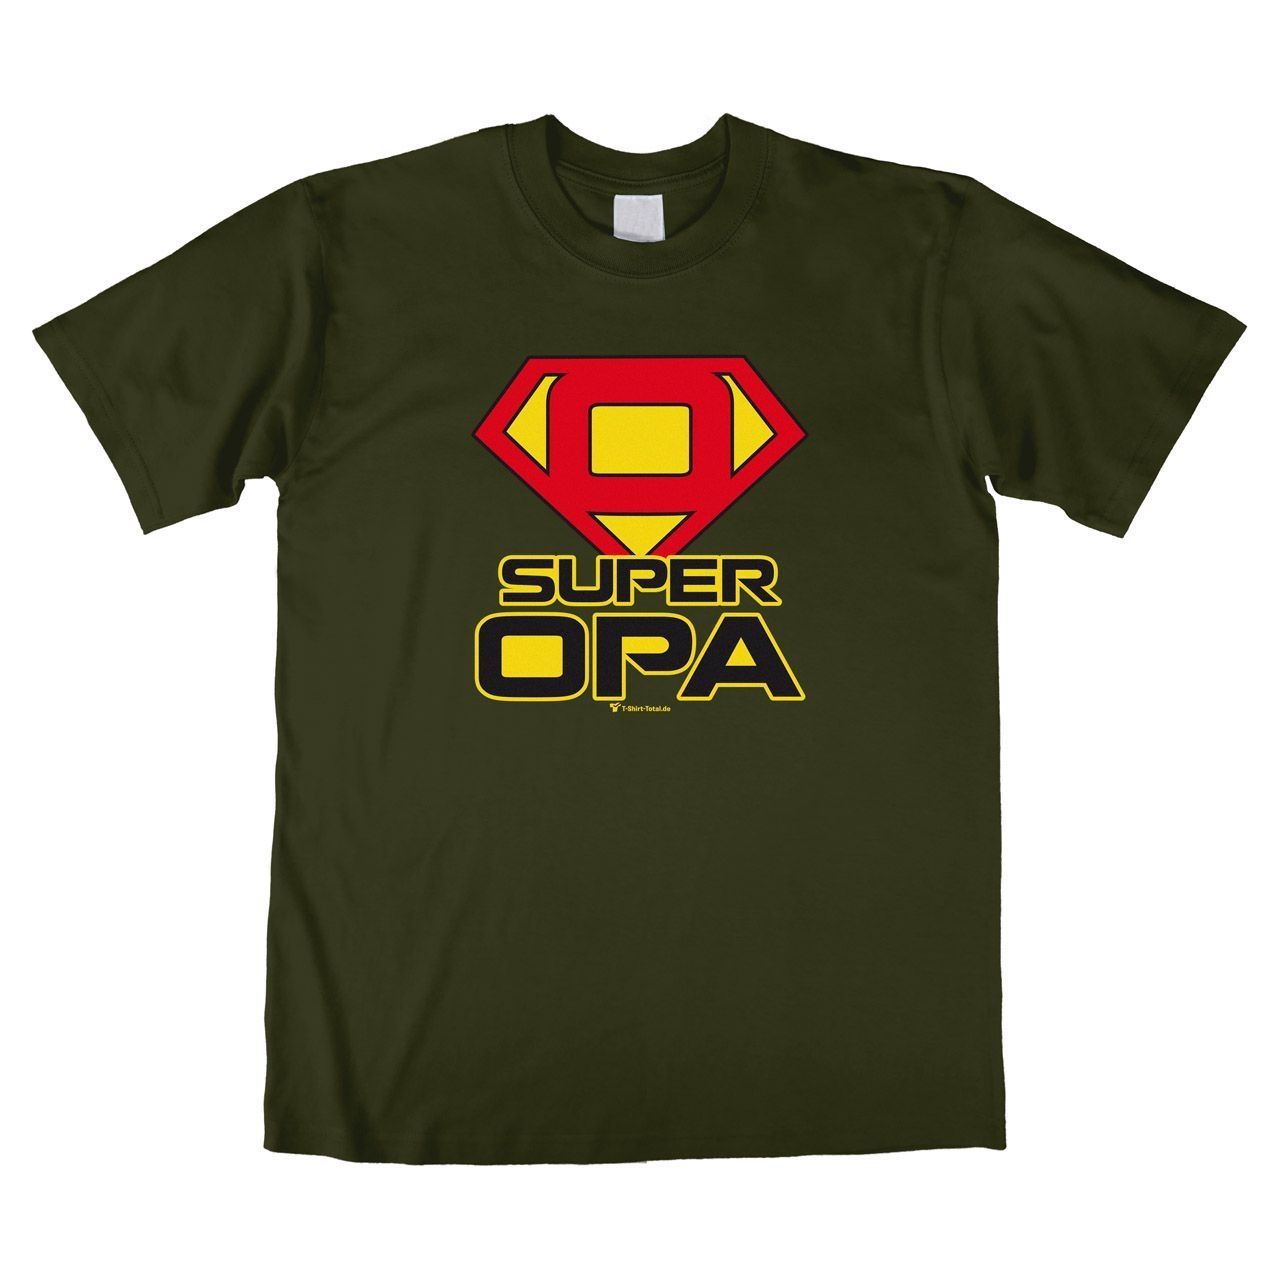 Super Opa Unisex T-Shirt khaki Large